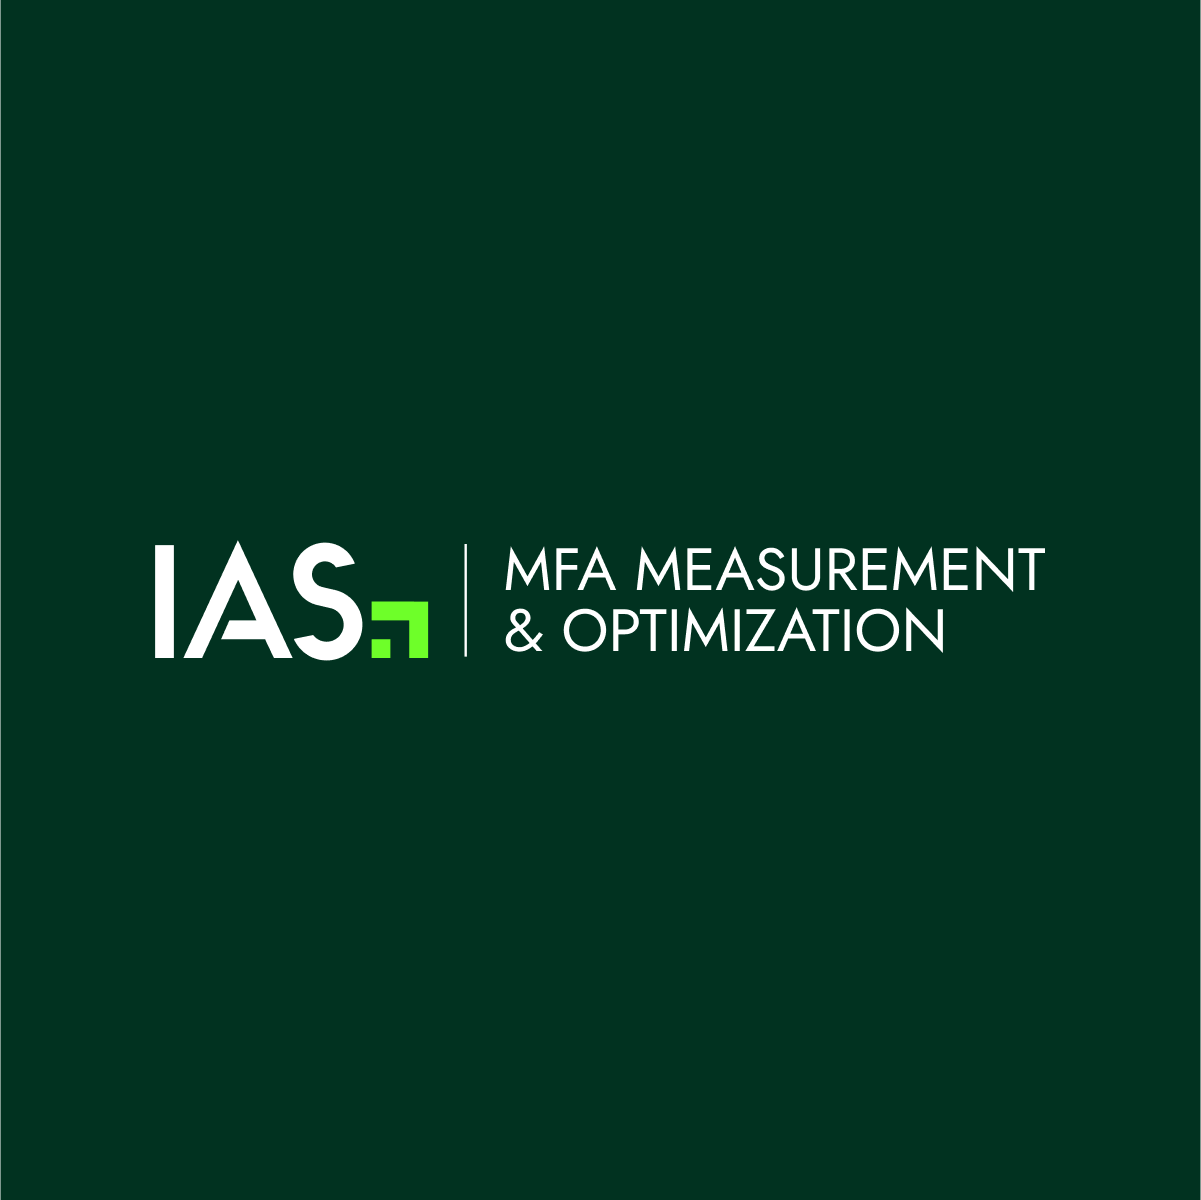 Integral Ad Science MFA Measurement and Optimization